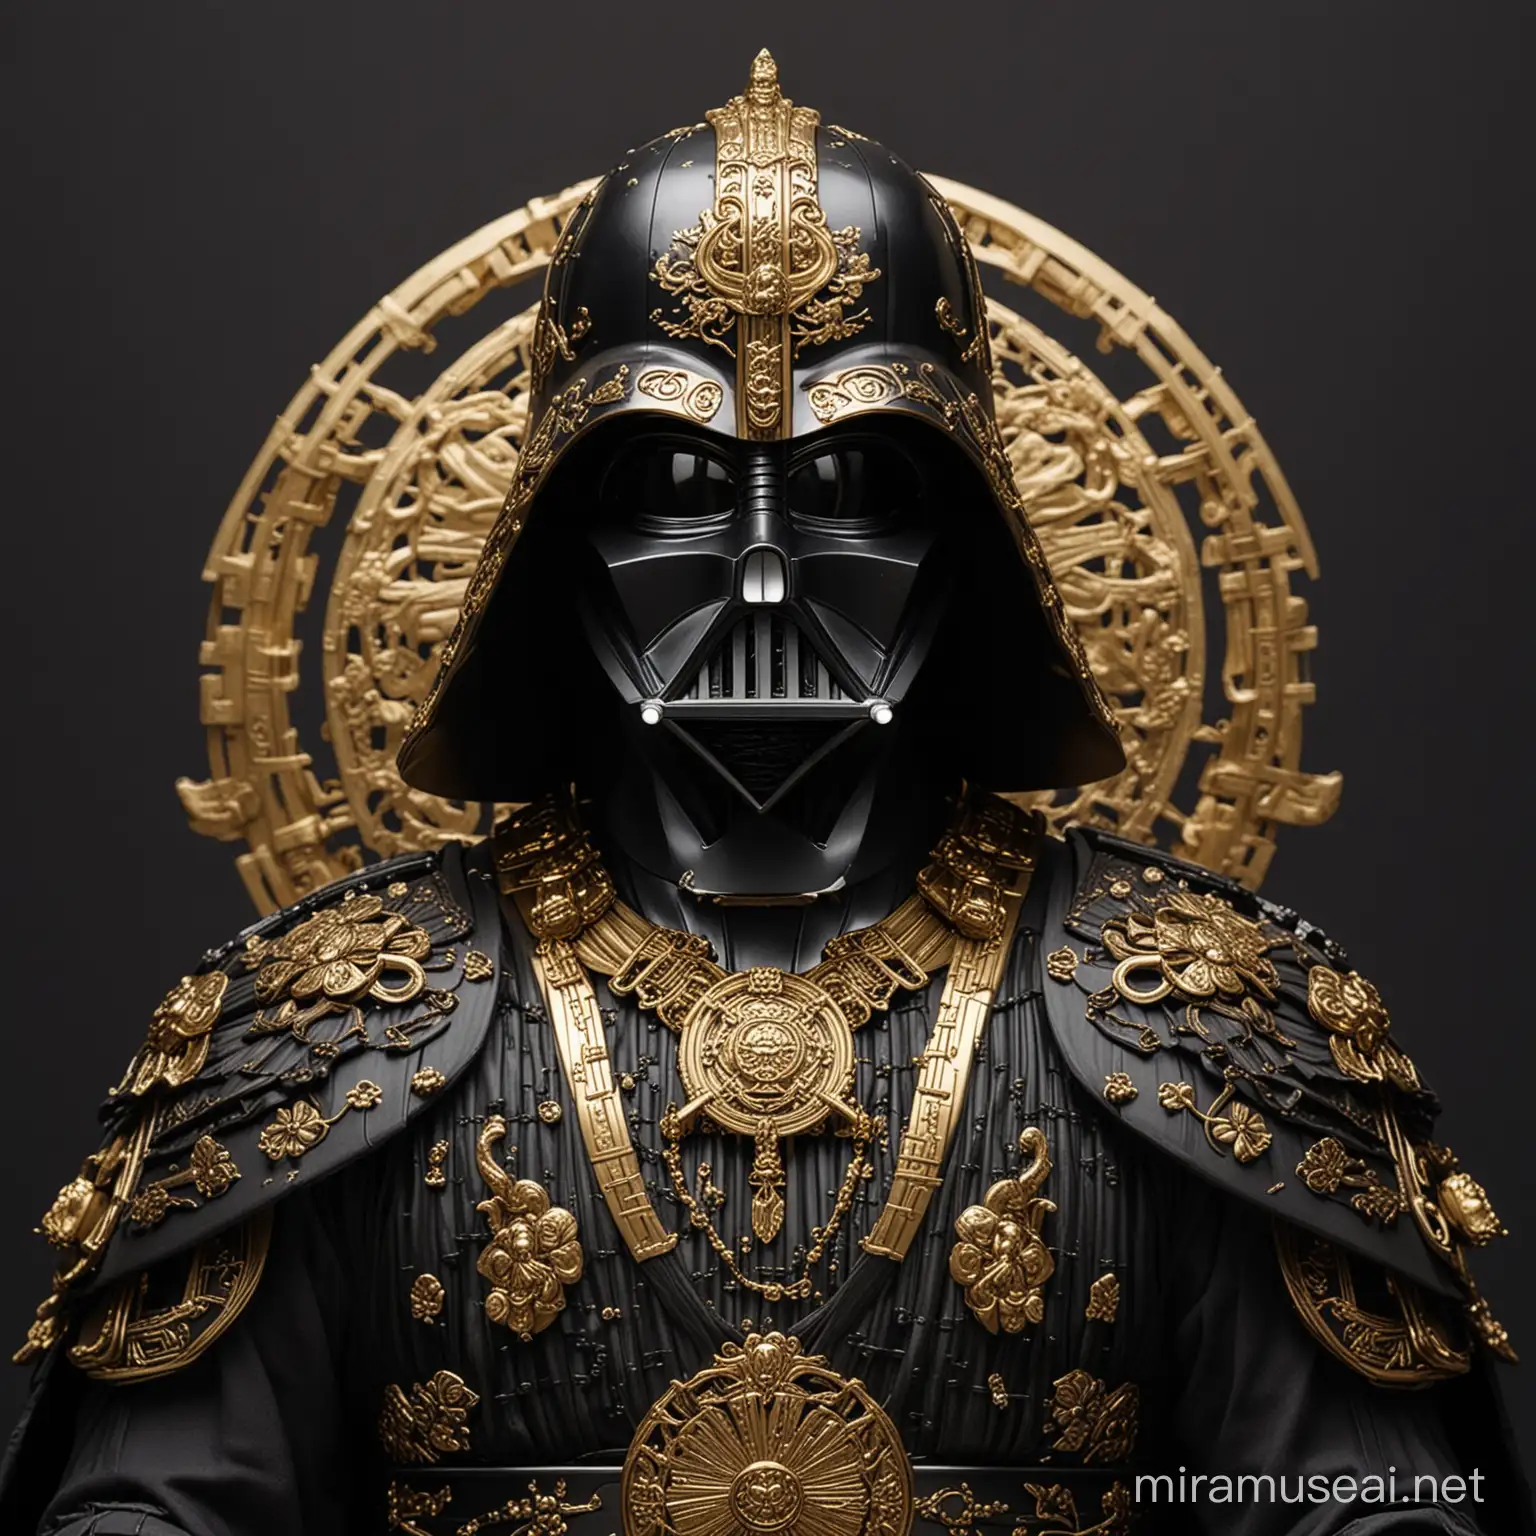 Darth Vader in samurai strength, with distinctive gold ornamentation.